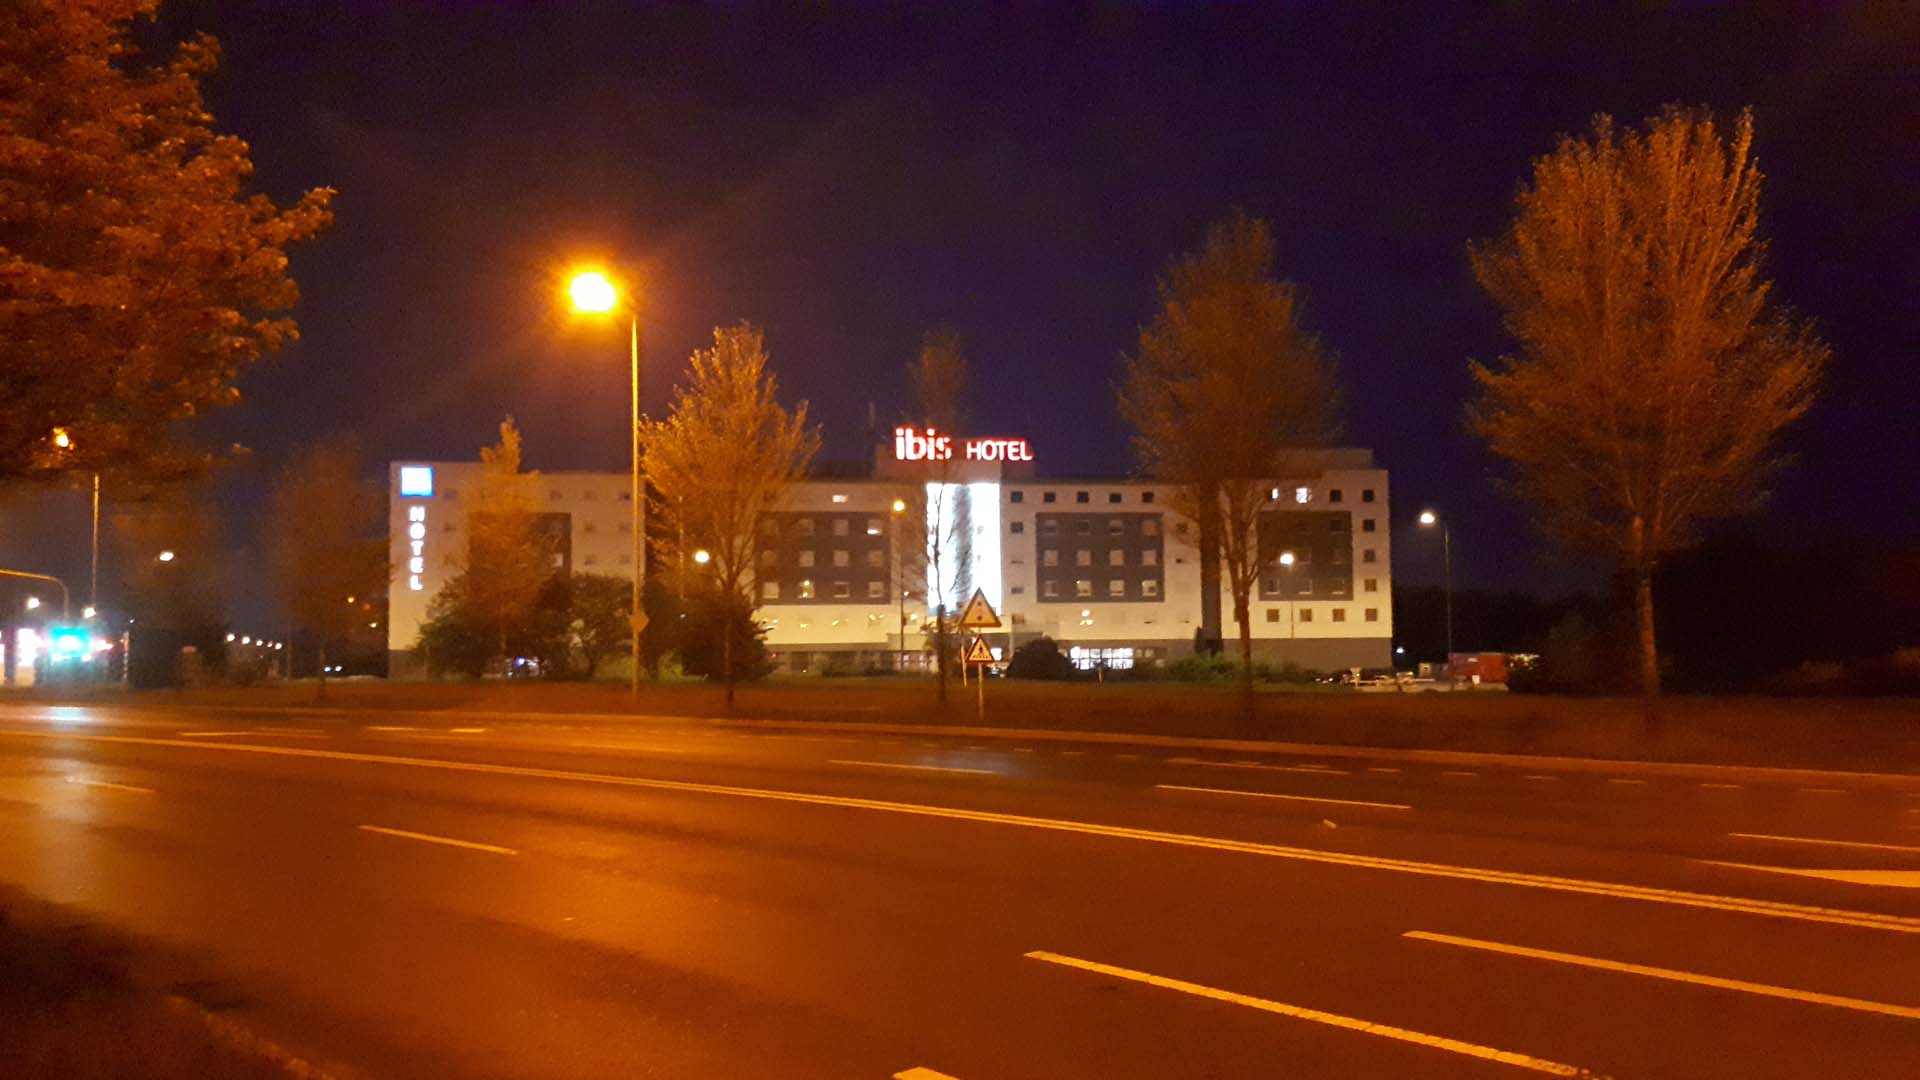 luxemburgo hotel